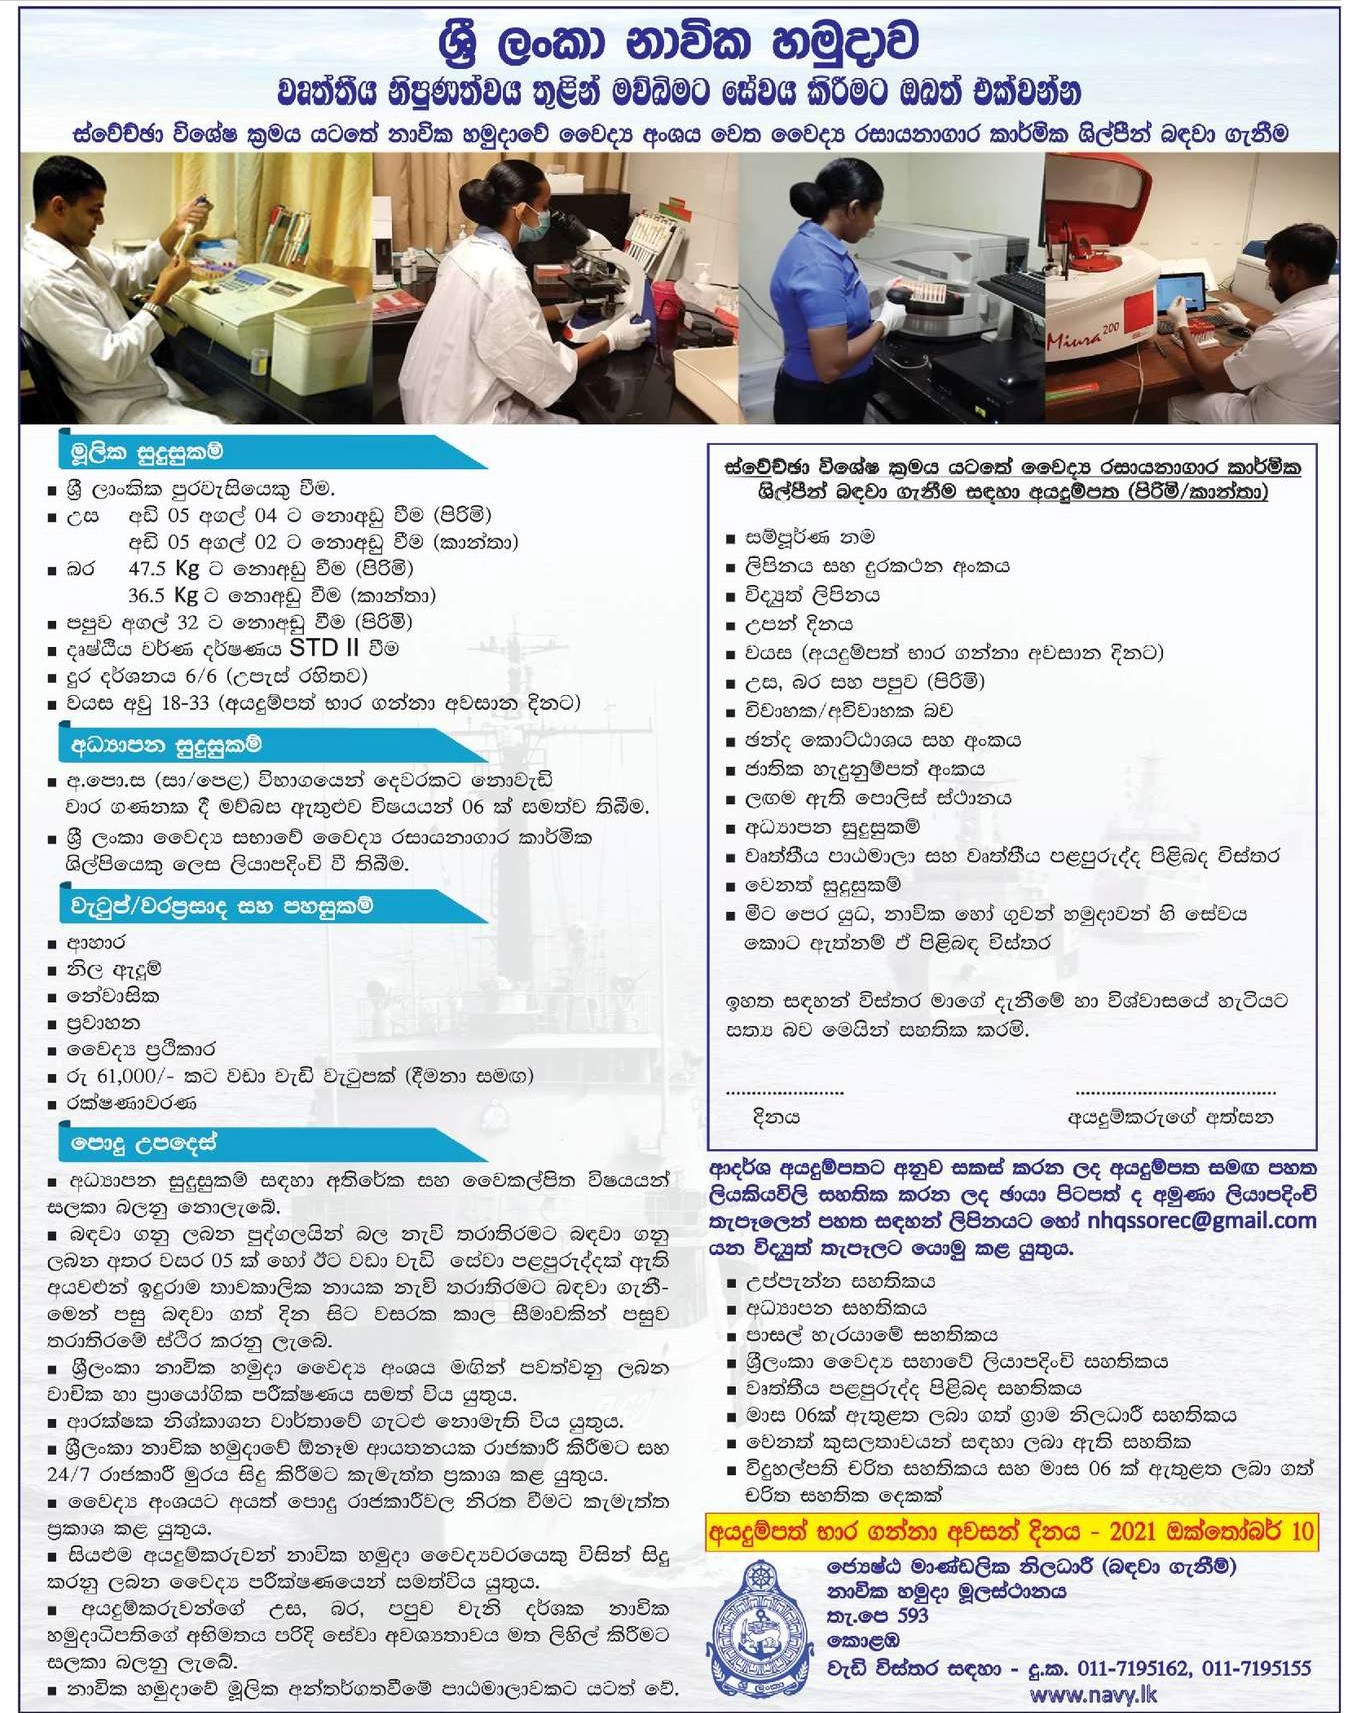 Medical Laboratory Technician - Sri Lanka Navy